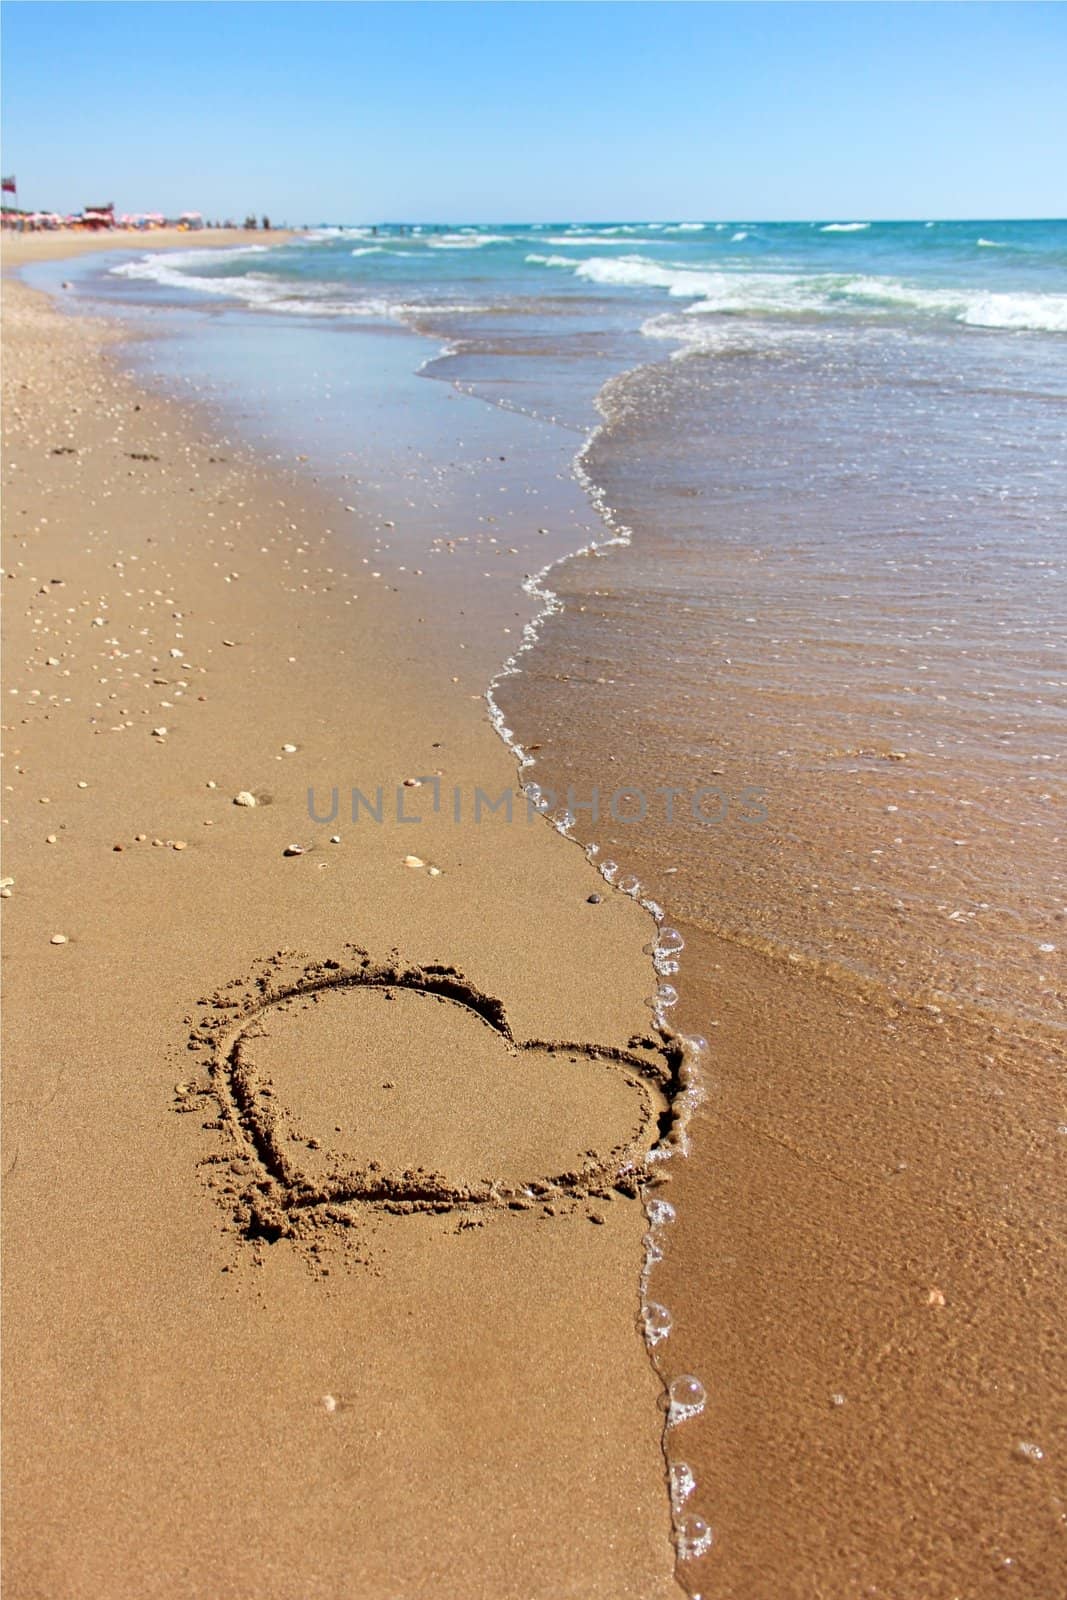 the heart on sand by irisphoto4